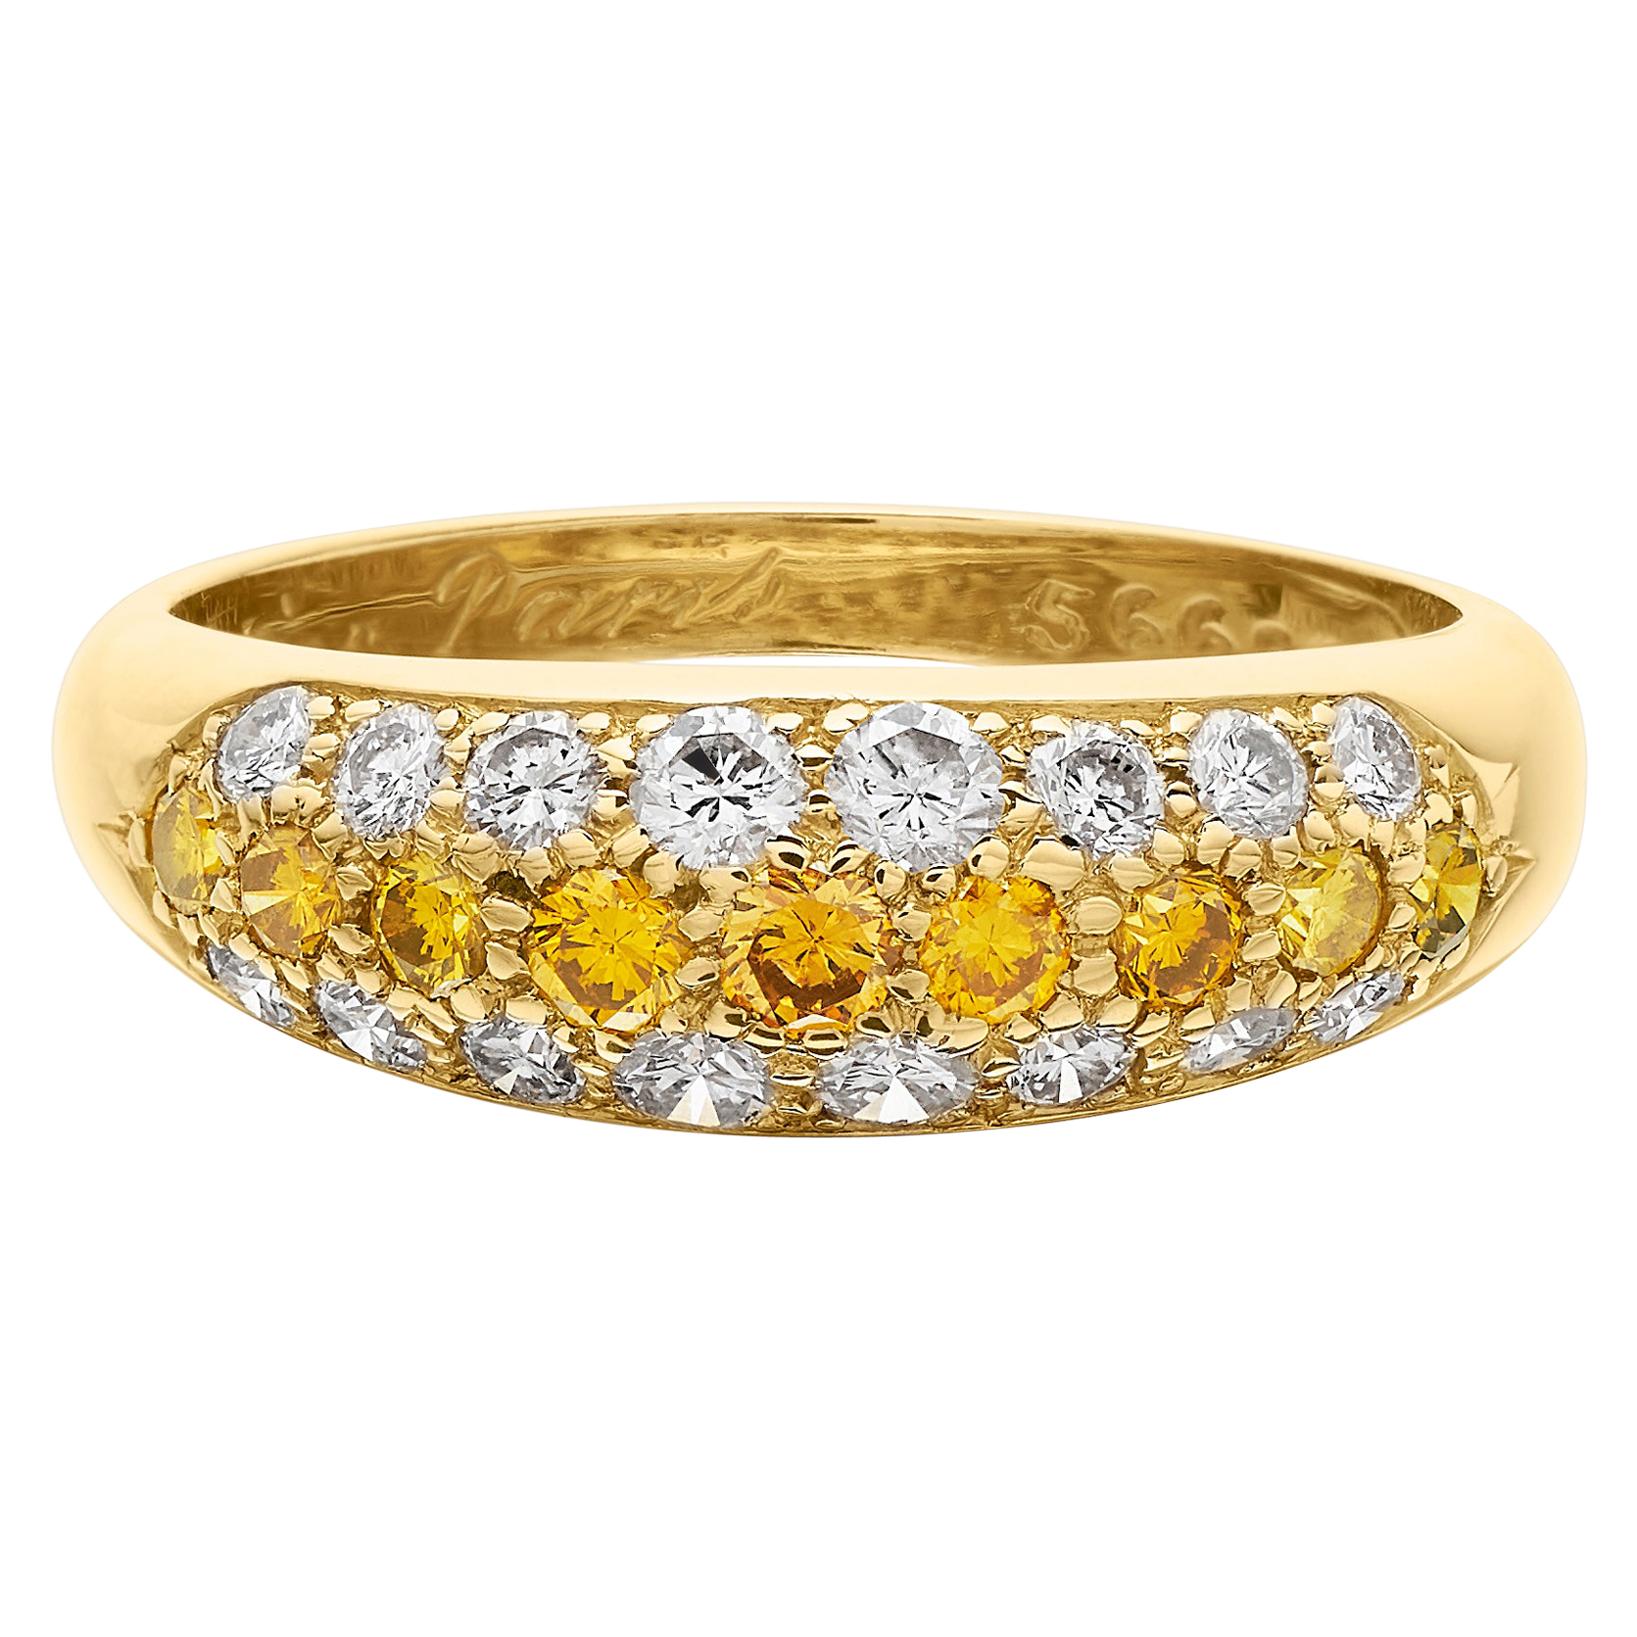 Cartier Love Etincelle, Fancy Yellow Diamond Wedding/Engagement/Eternity Ring